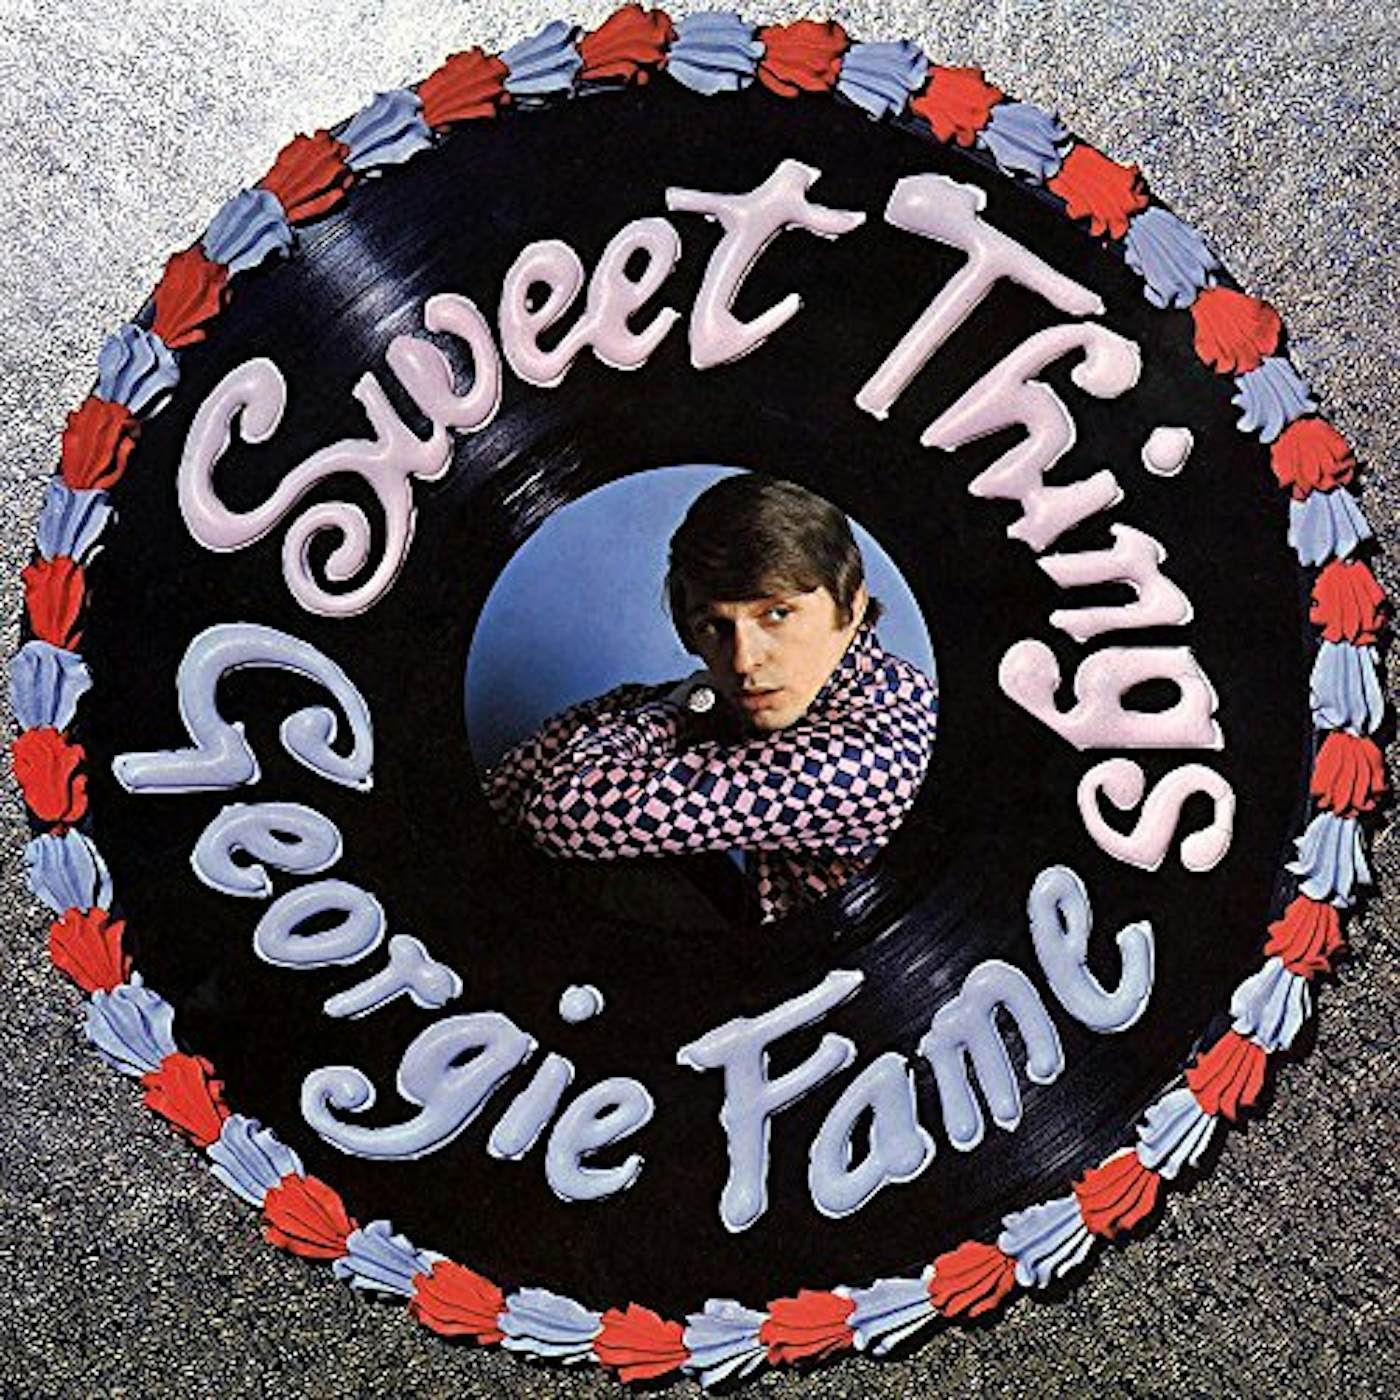 Georgie Fame SWEET THINGS CD